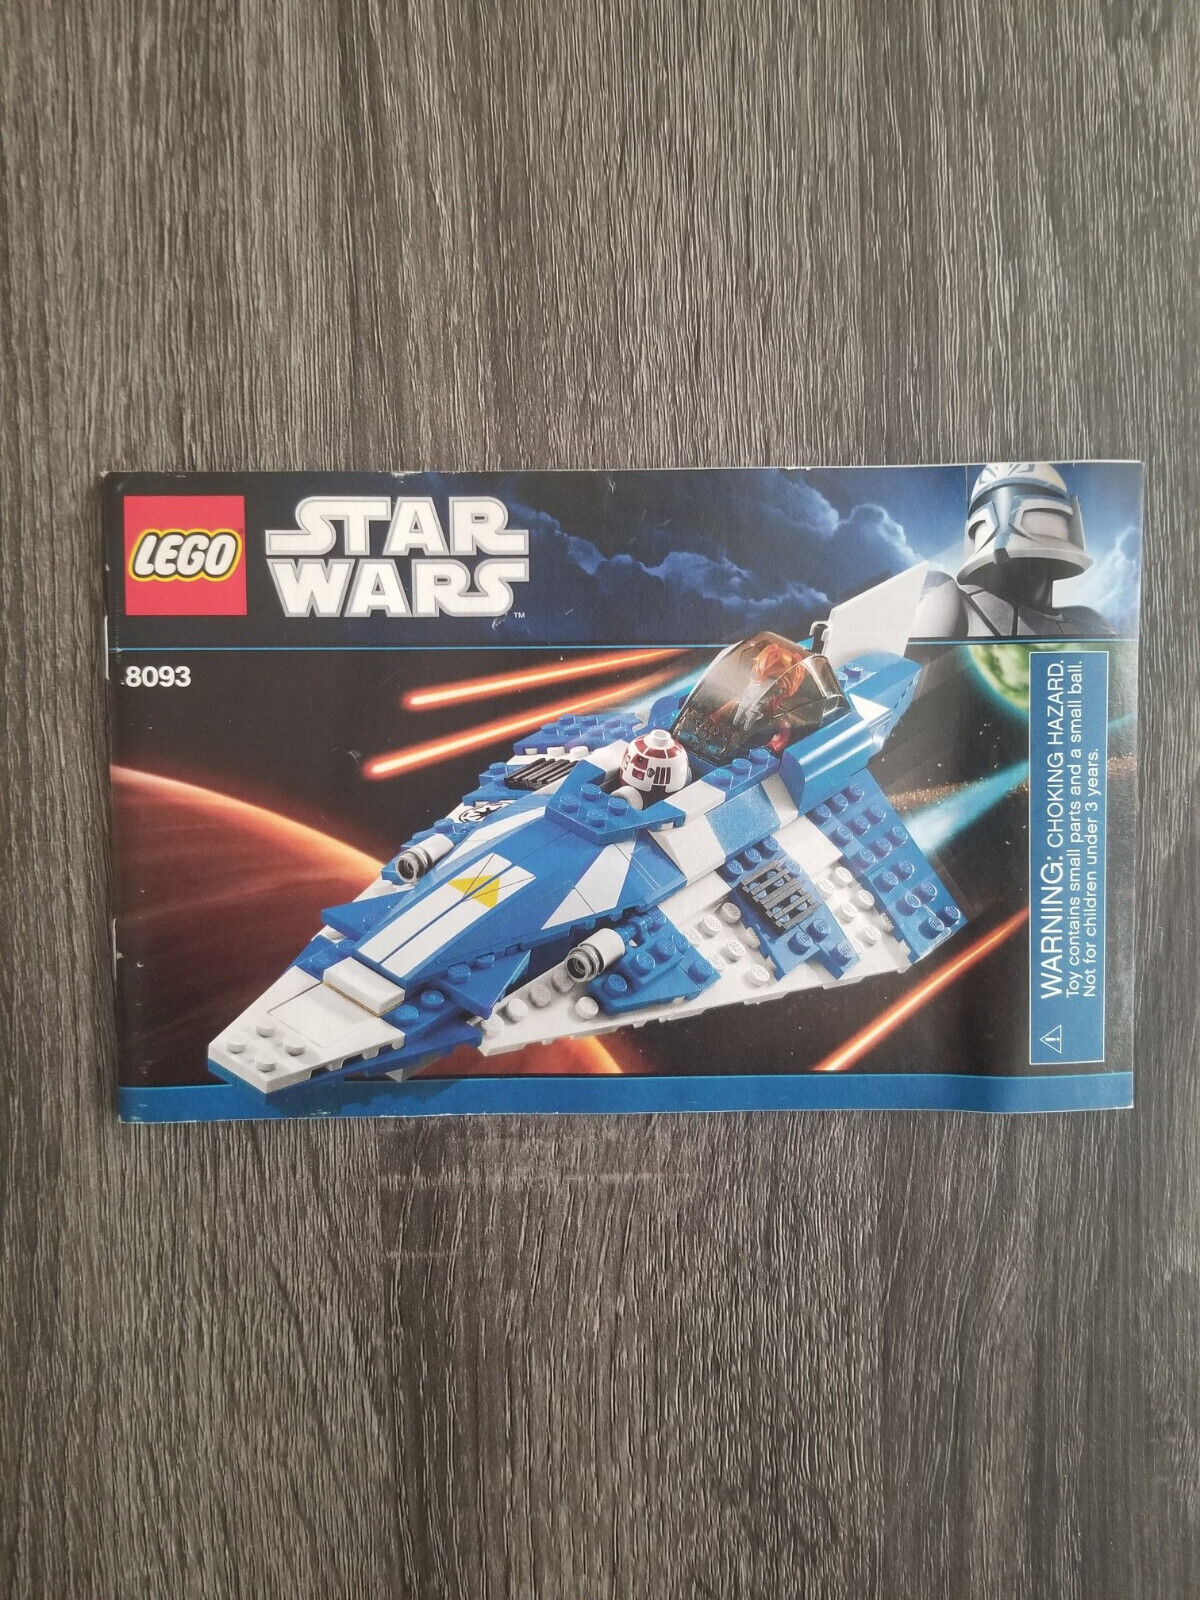 LEGO STAR WARS 8093 PLO KOON'S JEDI STARFIGHTER Manual Only